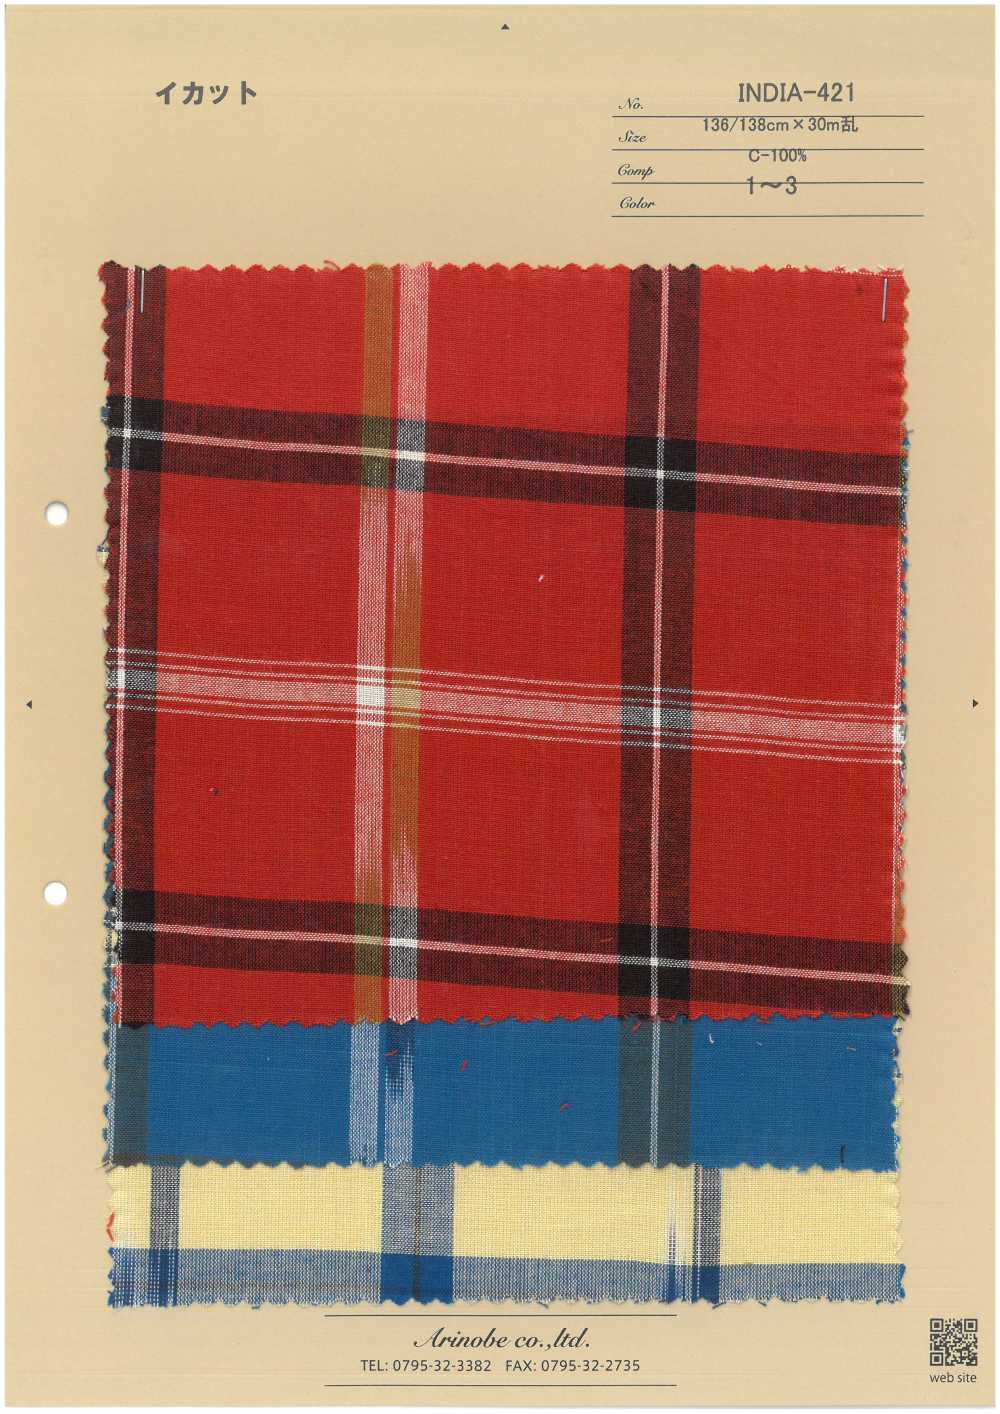 INDIA-421 Ikat[Textilgewebe] ARINOBE CO., LTD.